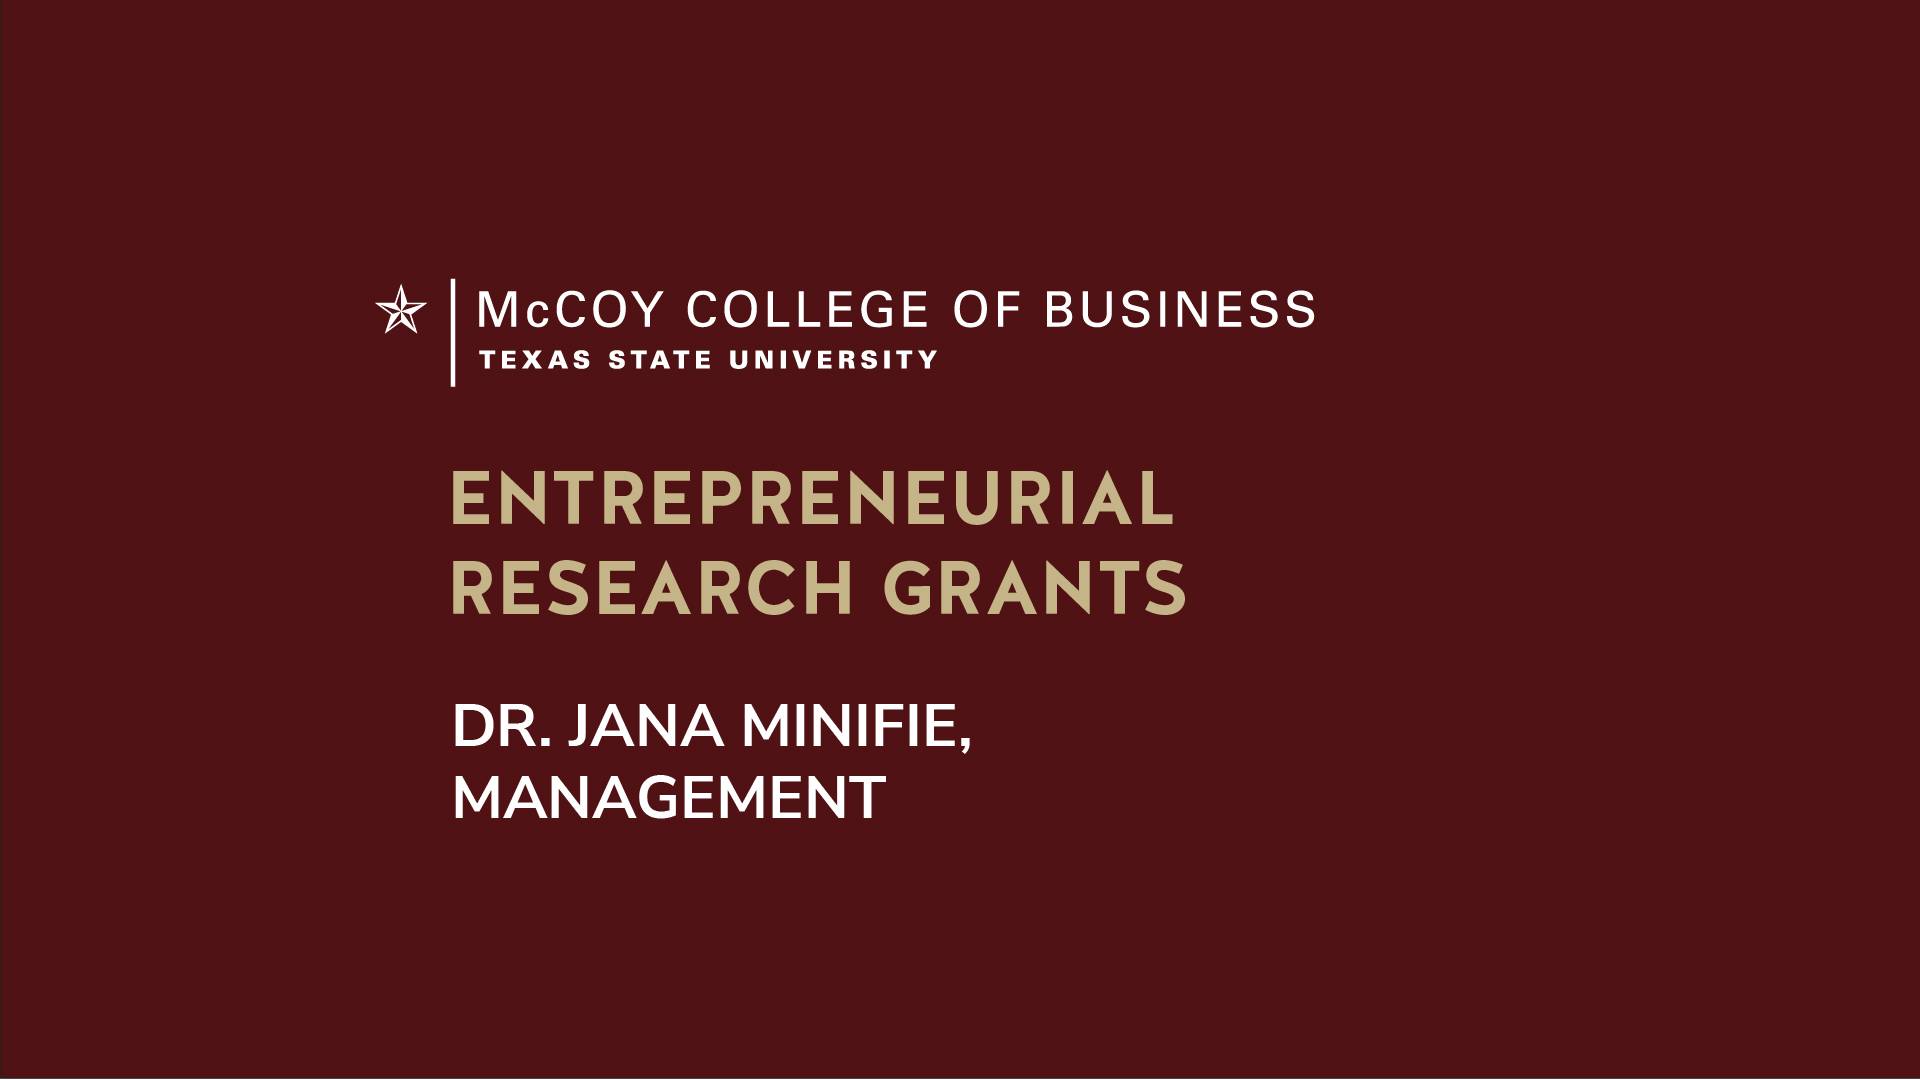 Dr. Jana Minifie discusses her entrepreneurship research grants